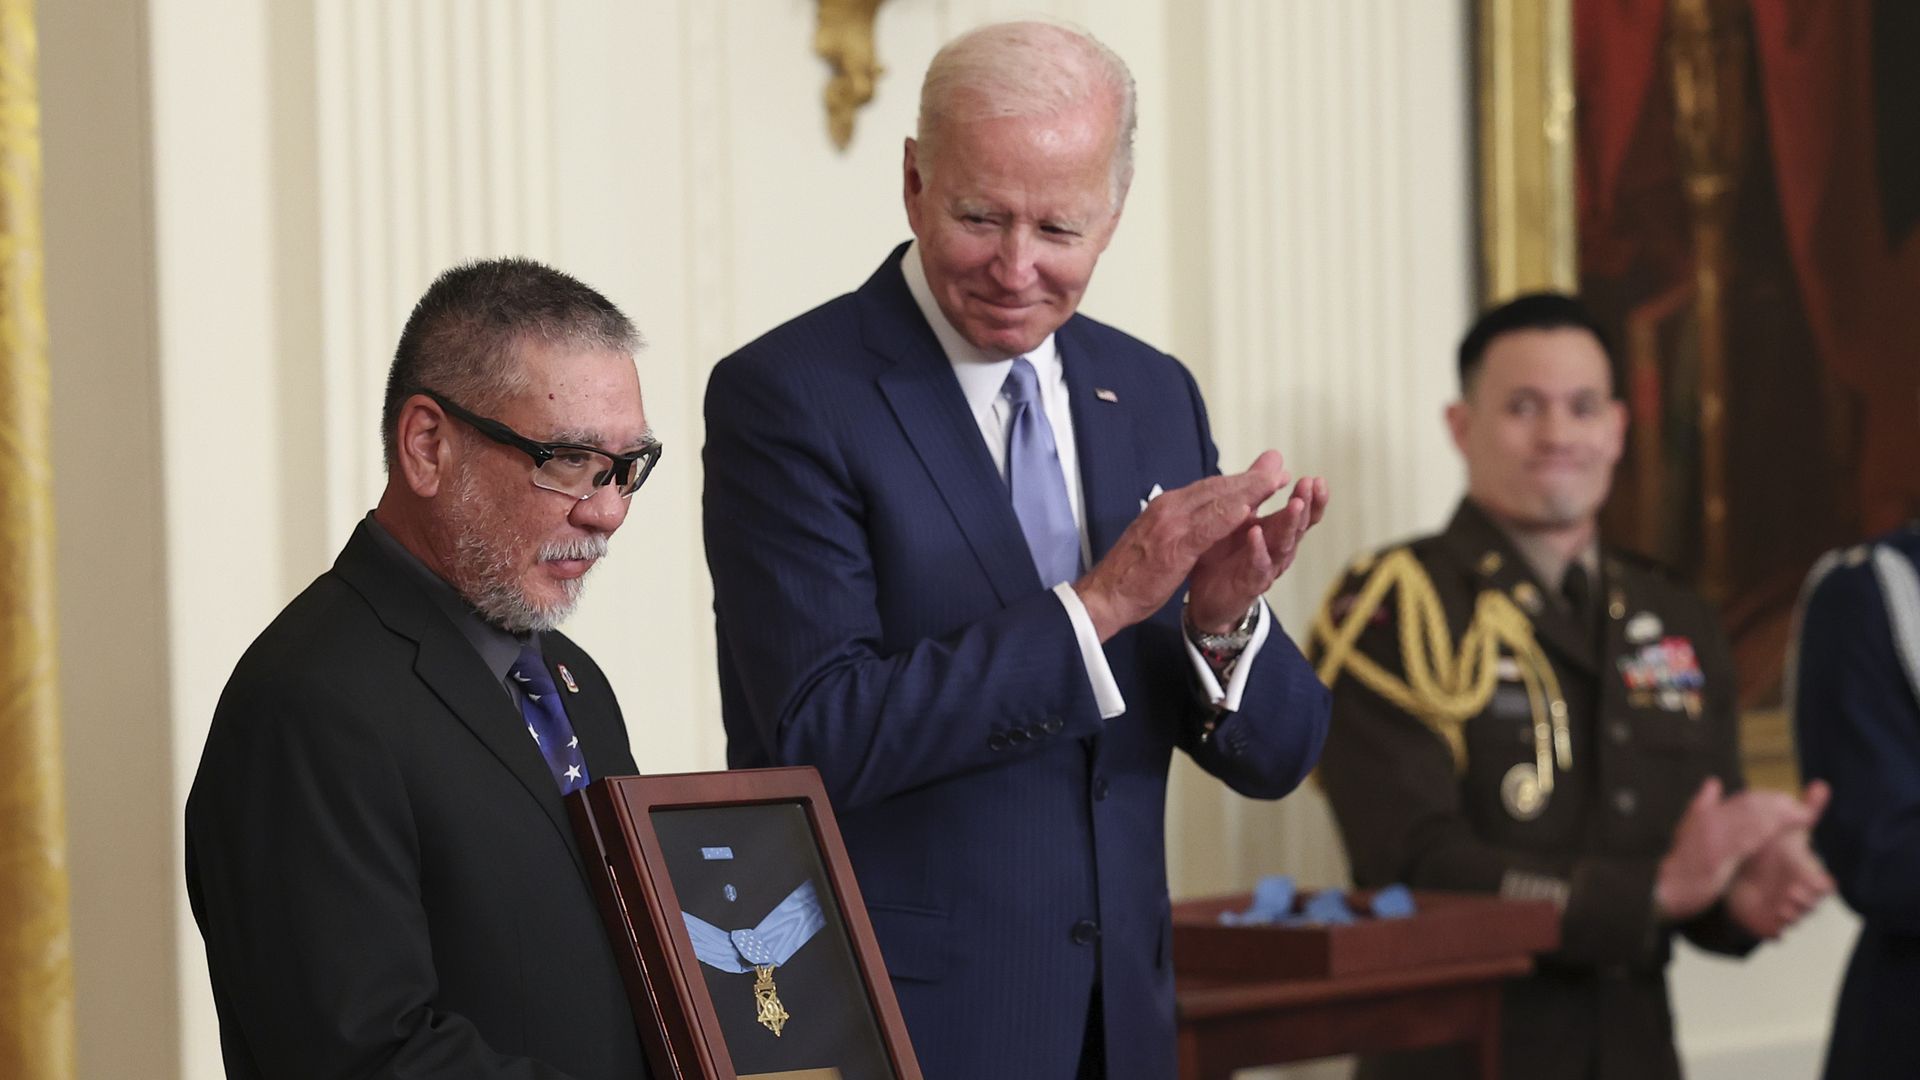 John Kaneshiro accepts the Medal of Honor